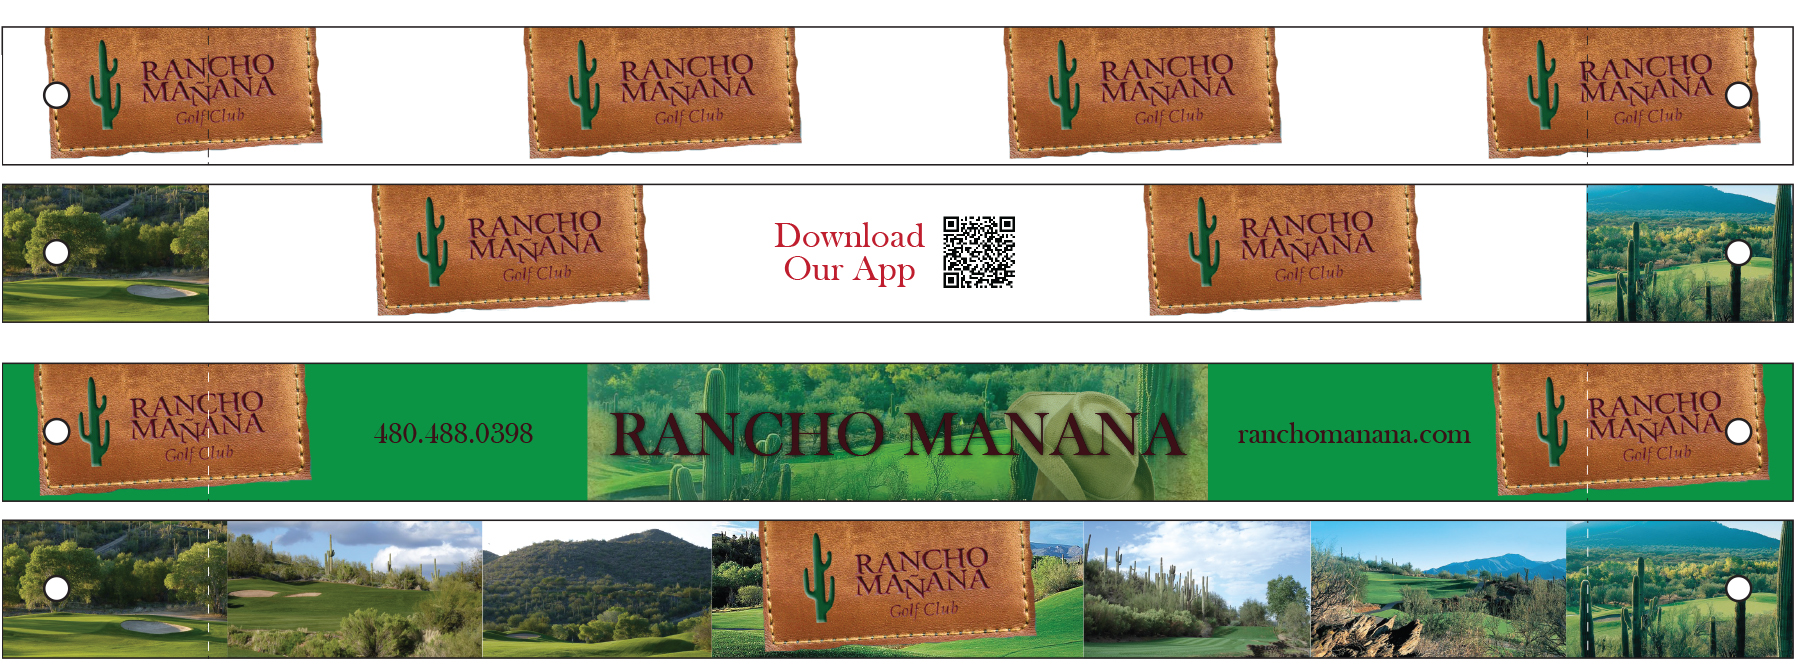 Rancho Manana Virtual